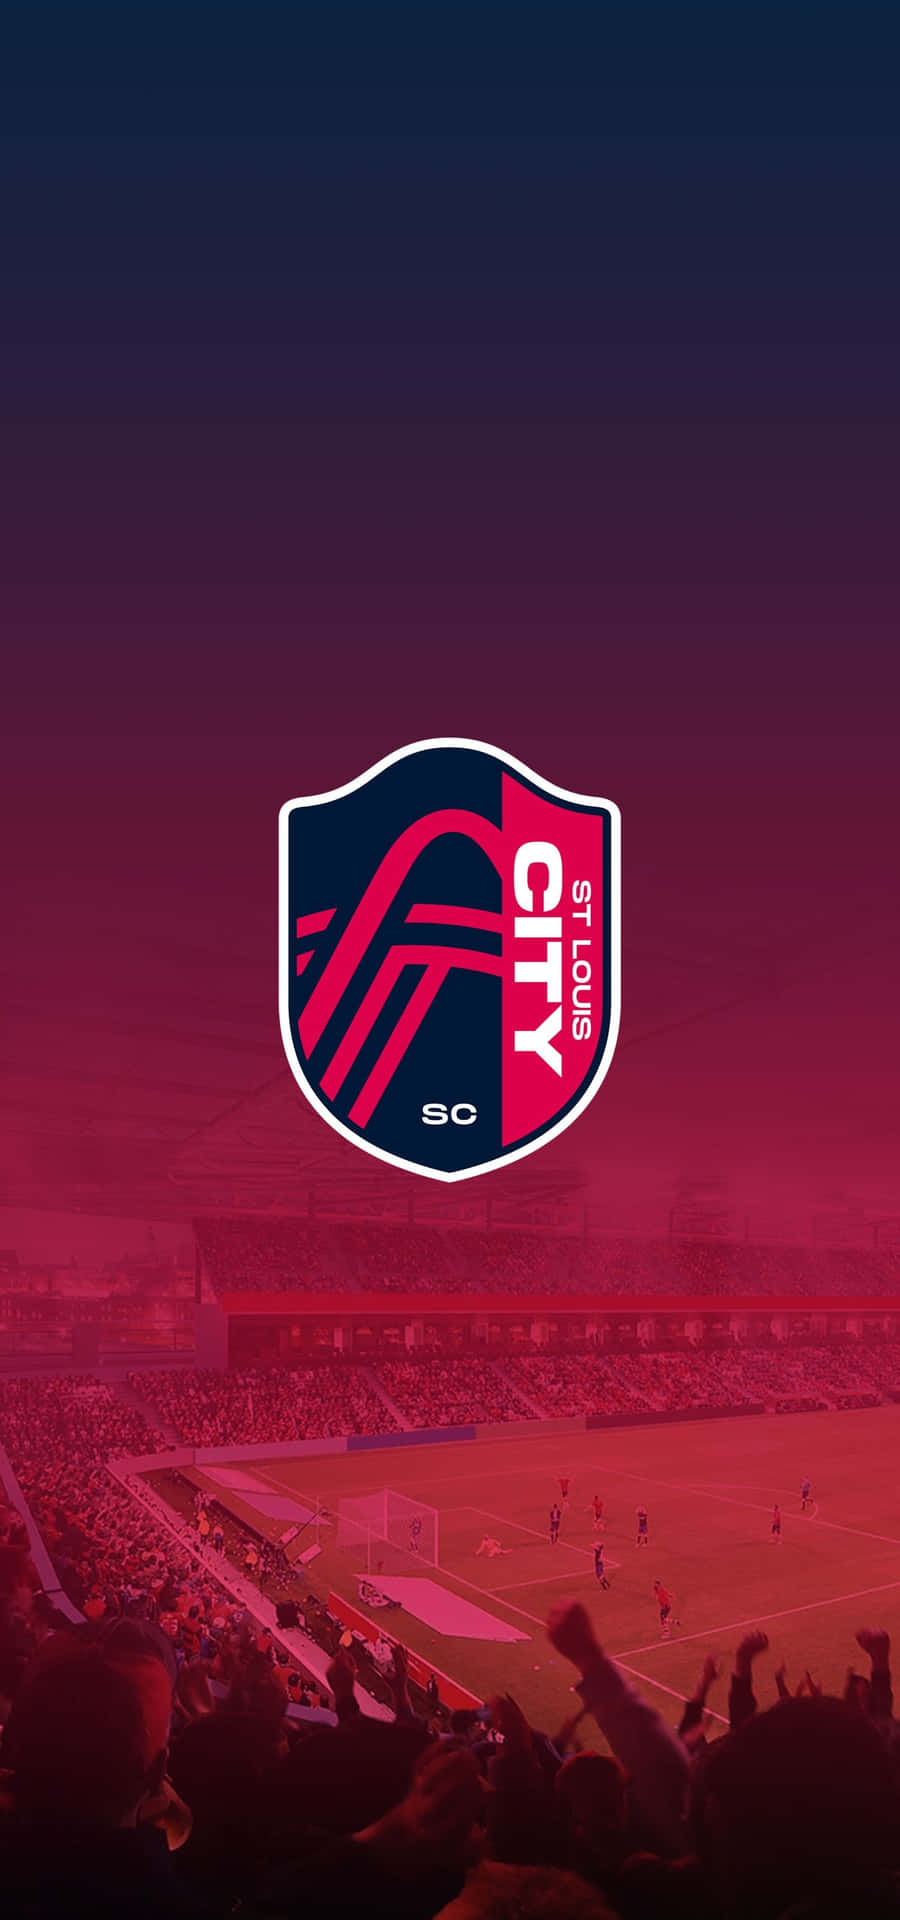 Download St. Louis City SC Football Pink Image Wallpaper